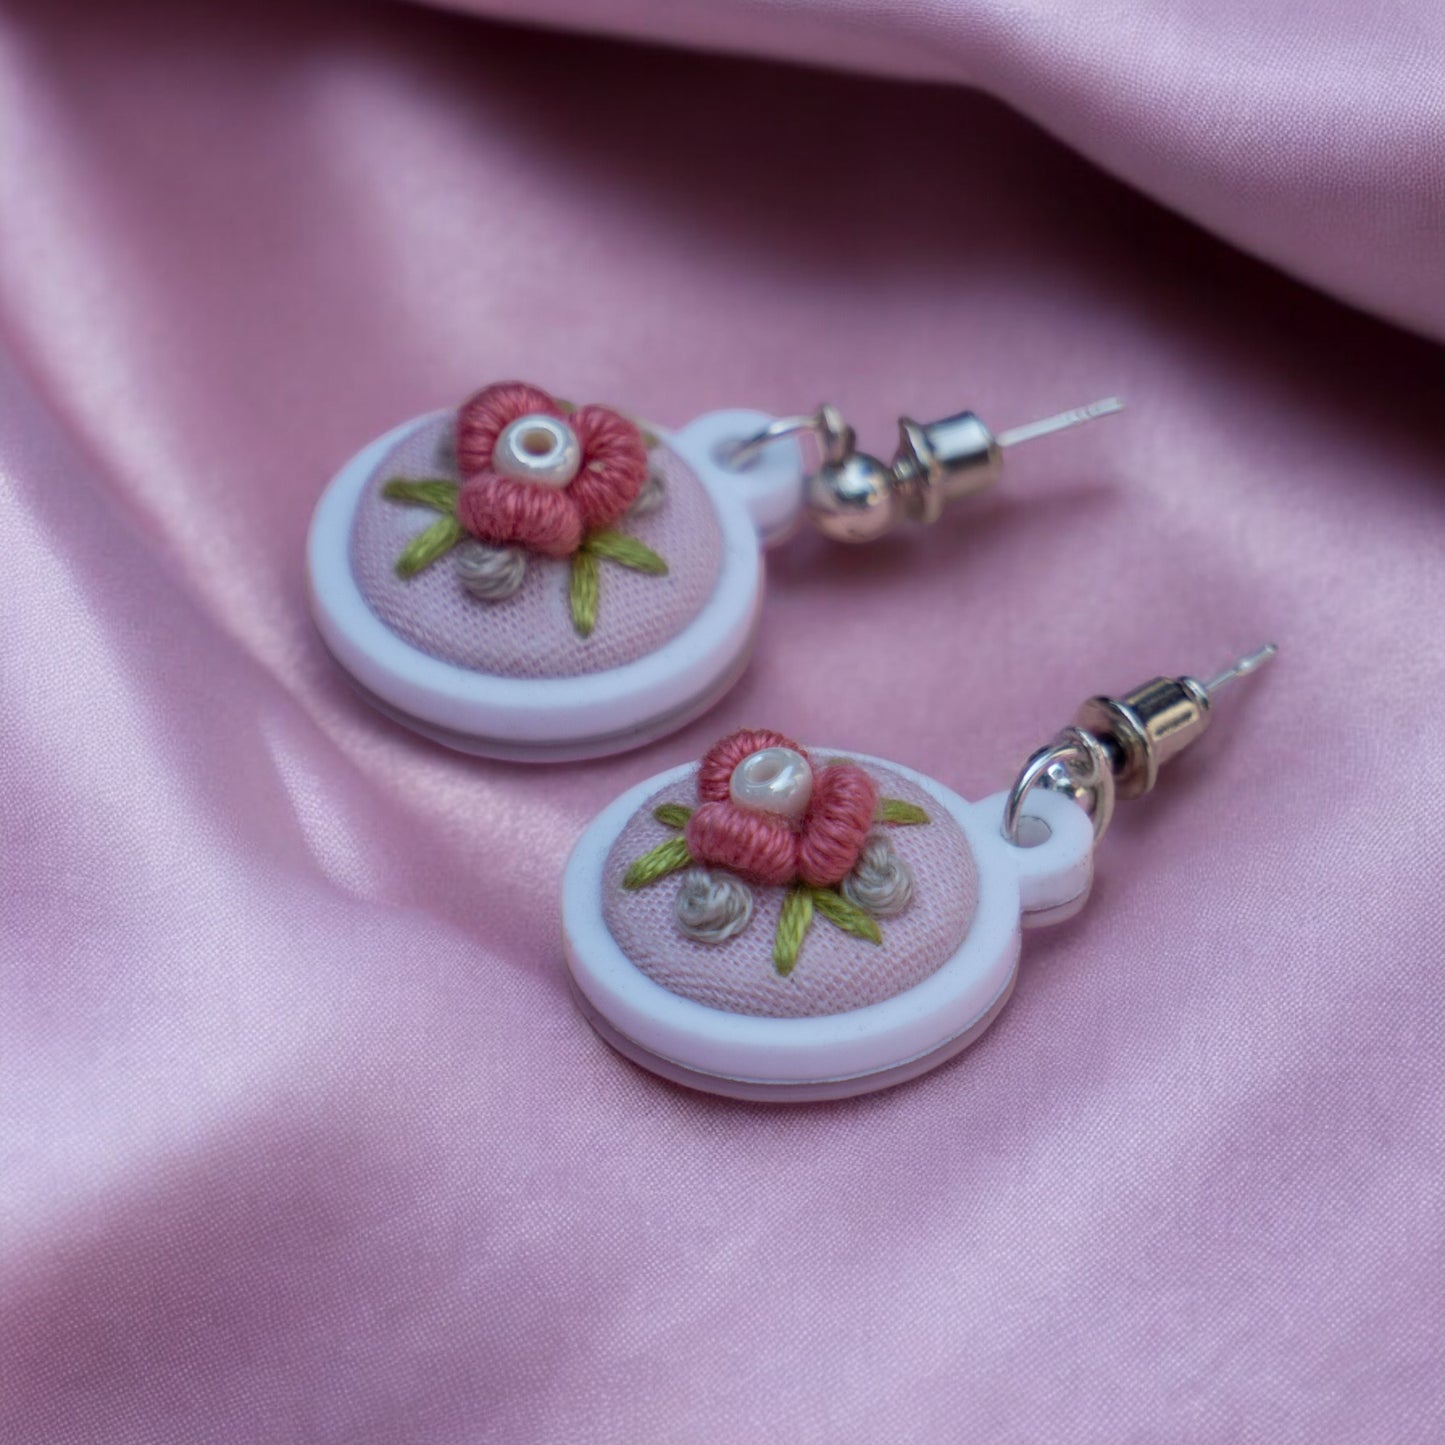 Pink Quartz - Dangle earrings